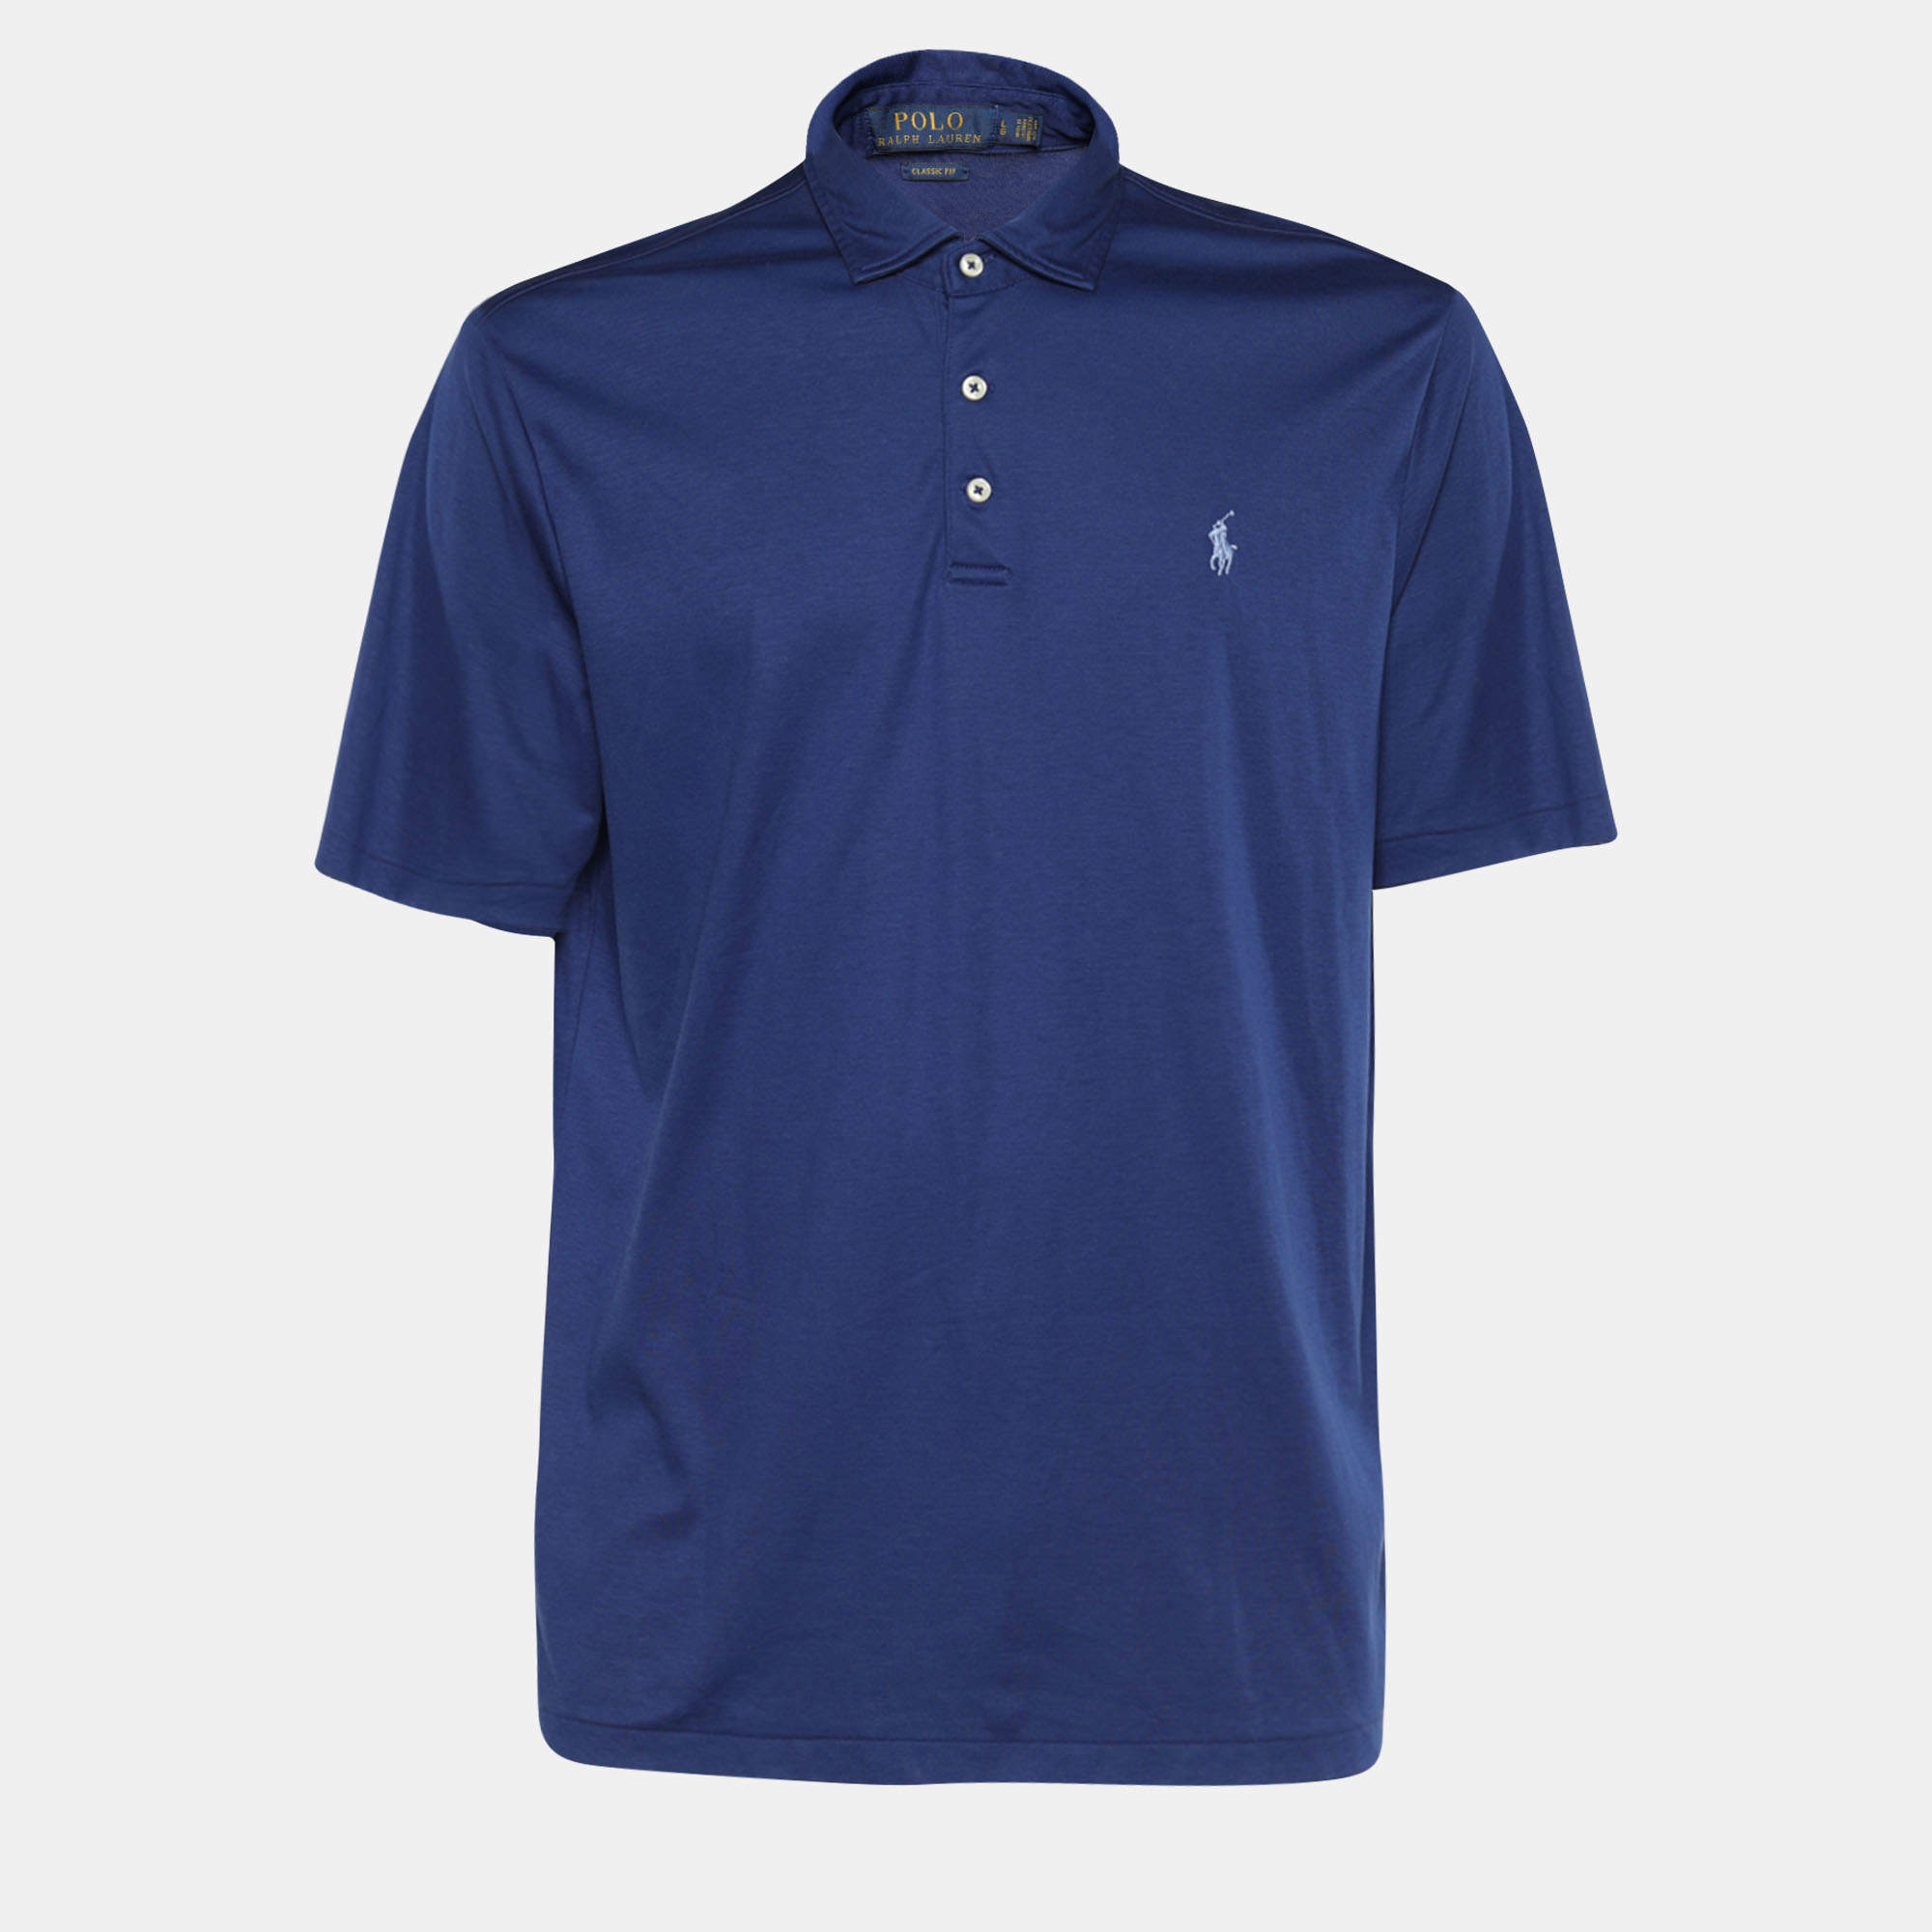 Polo Ralph Lauren Blue Jersey Classic Fit Polo T-Shirt L